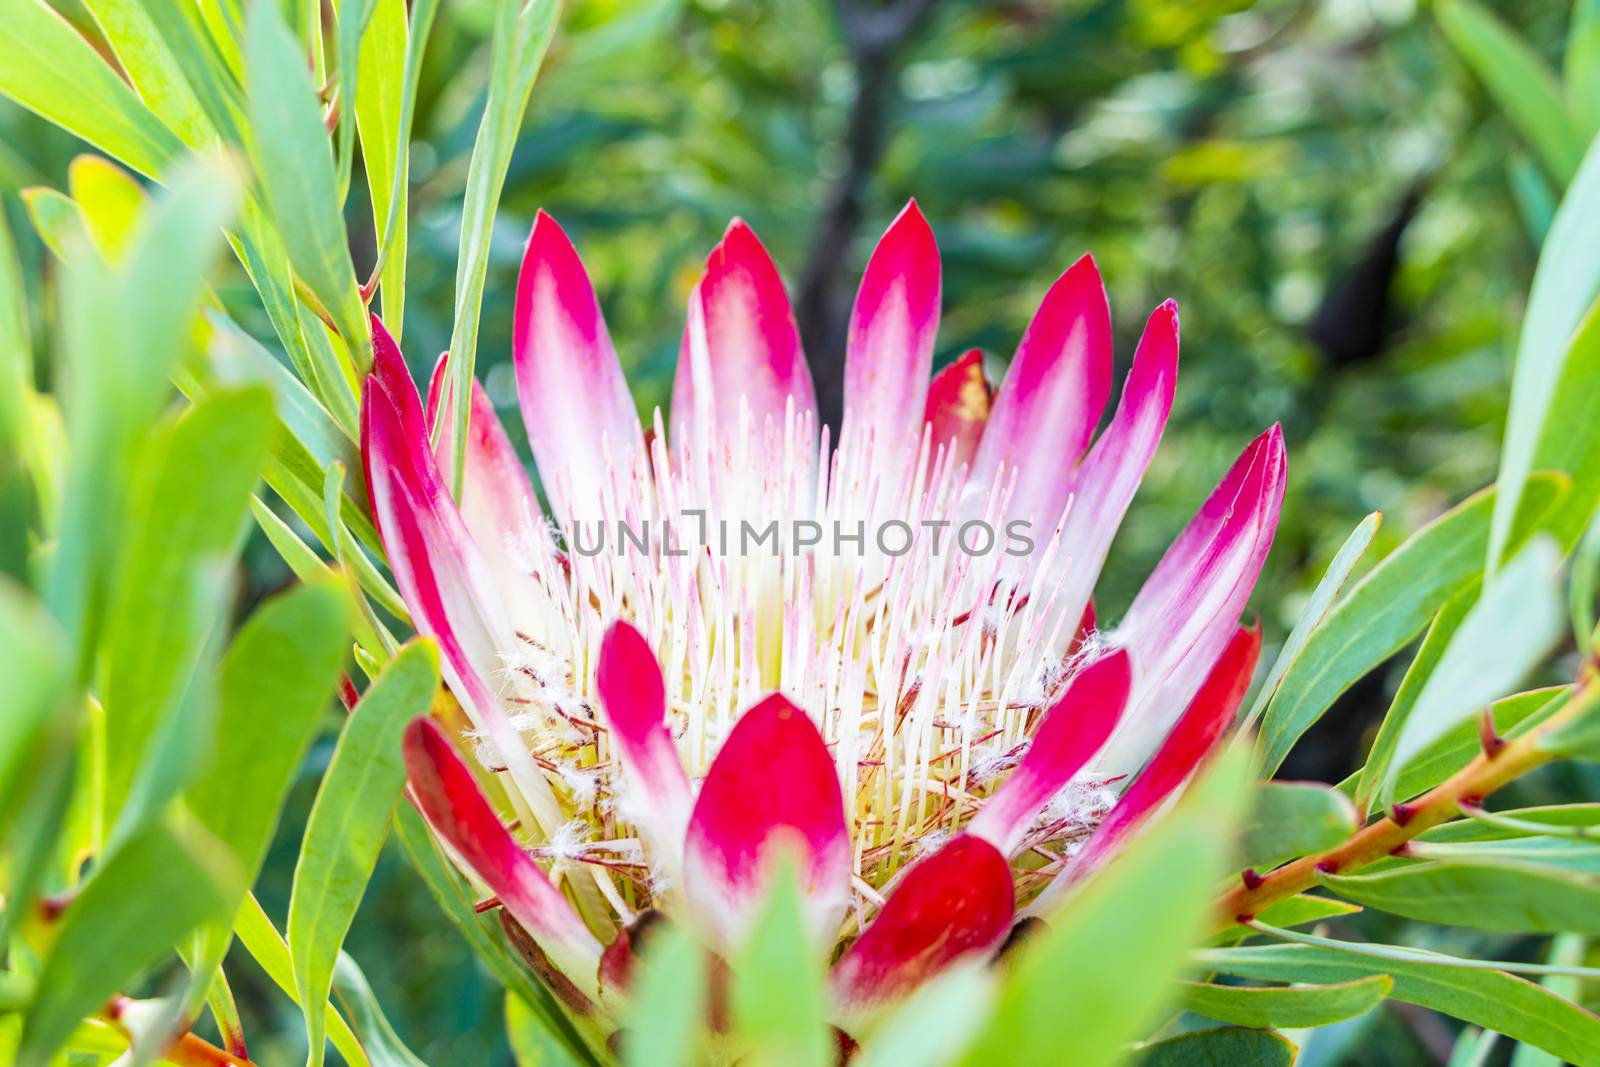 South African King Sugar Bush Pink Protea cynaroides in Kirstenbosch National Botanical Garden, Cape Town, South Africa.